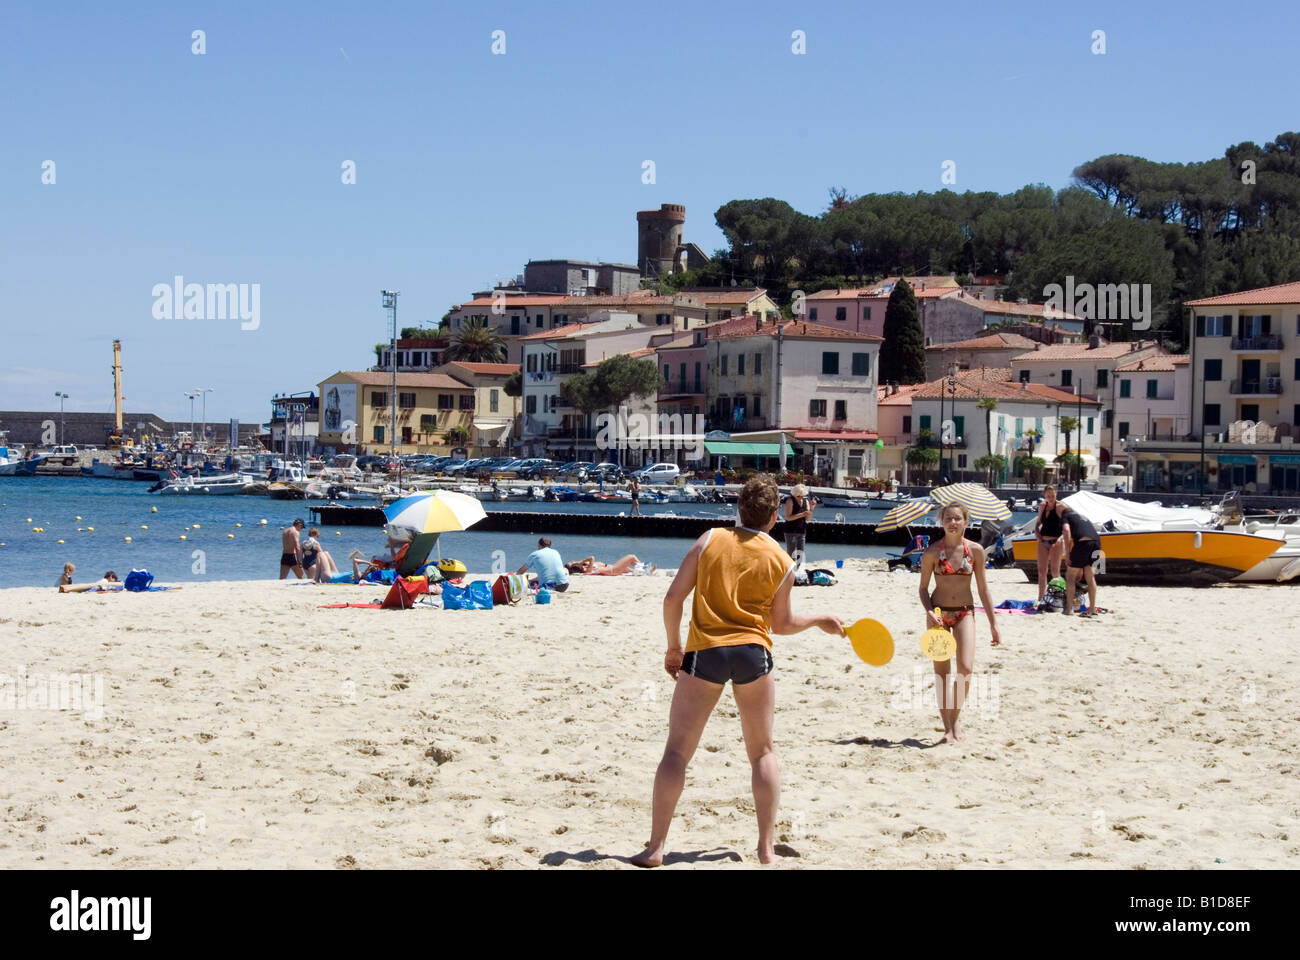 holiday makers playing beach tennis on the beach at Marina di Campo Island of Elba, Tuscany Italy Stock Photo